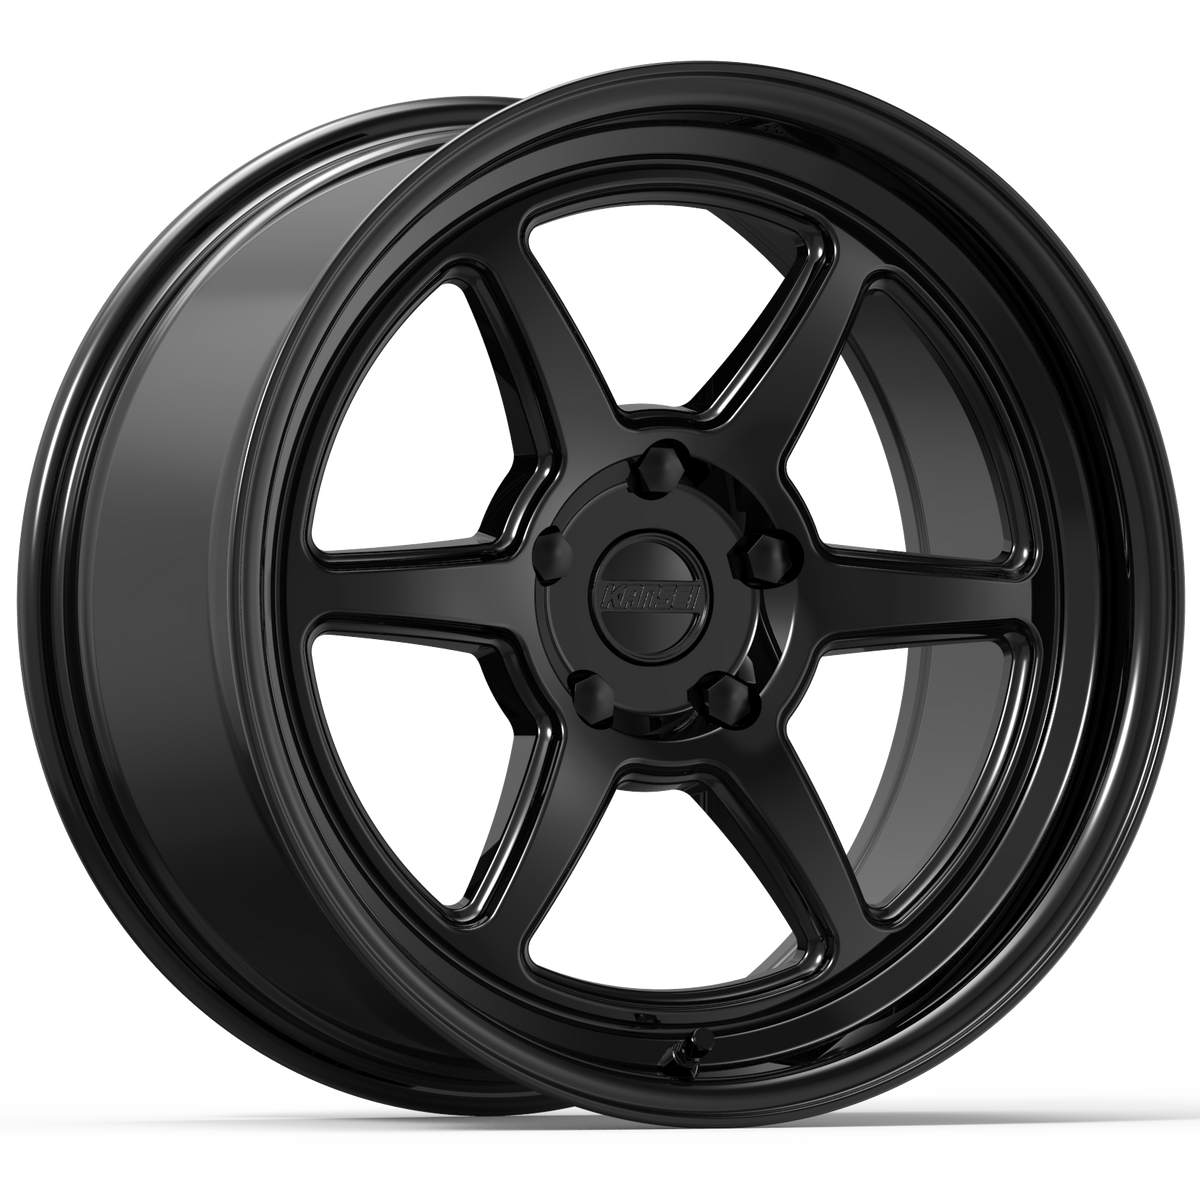 K14B ROKU Wheel, Size: 17" x 8.50", Bolt Pattern: 5 x 127 mm, Backspace: 4.75" [Finish: Gloss Black]